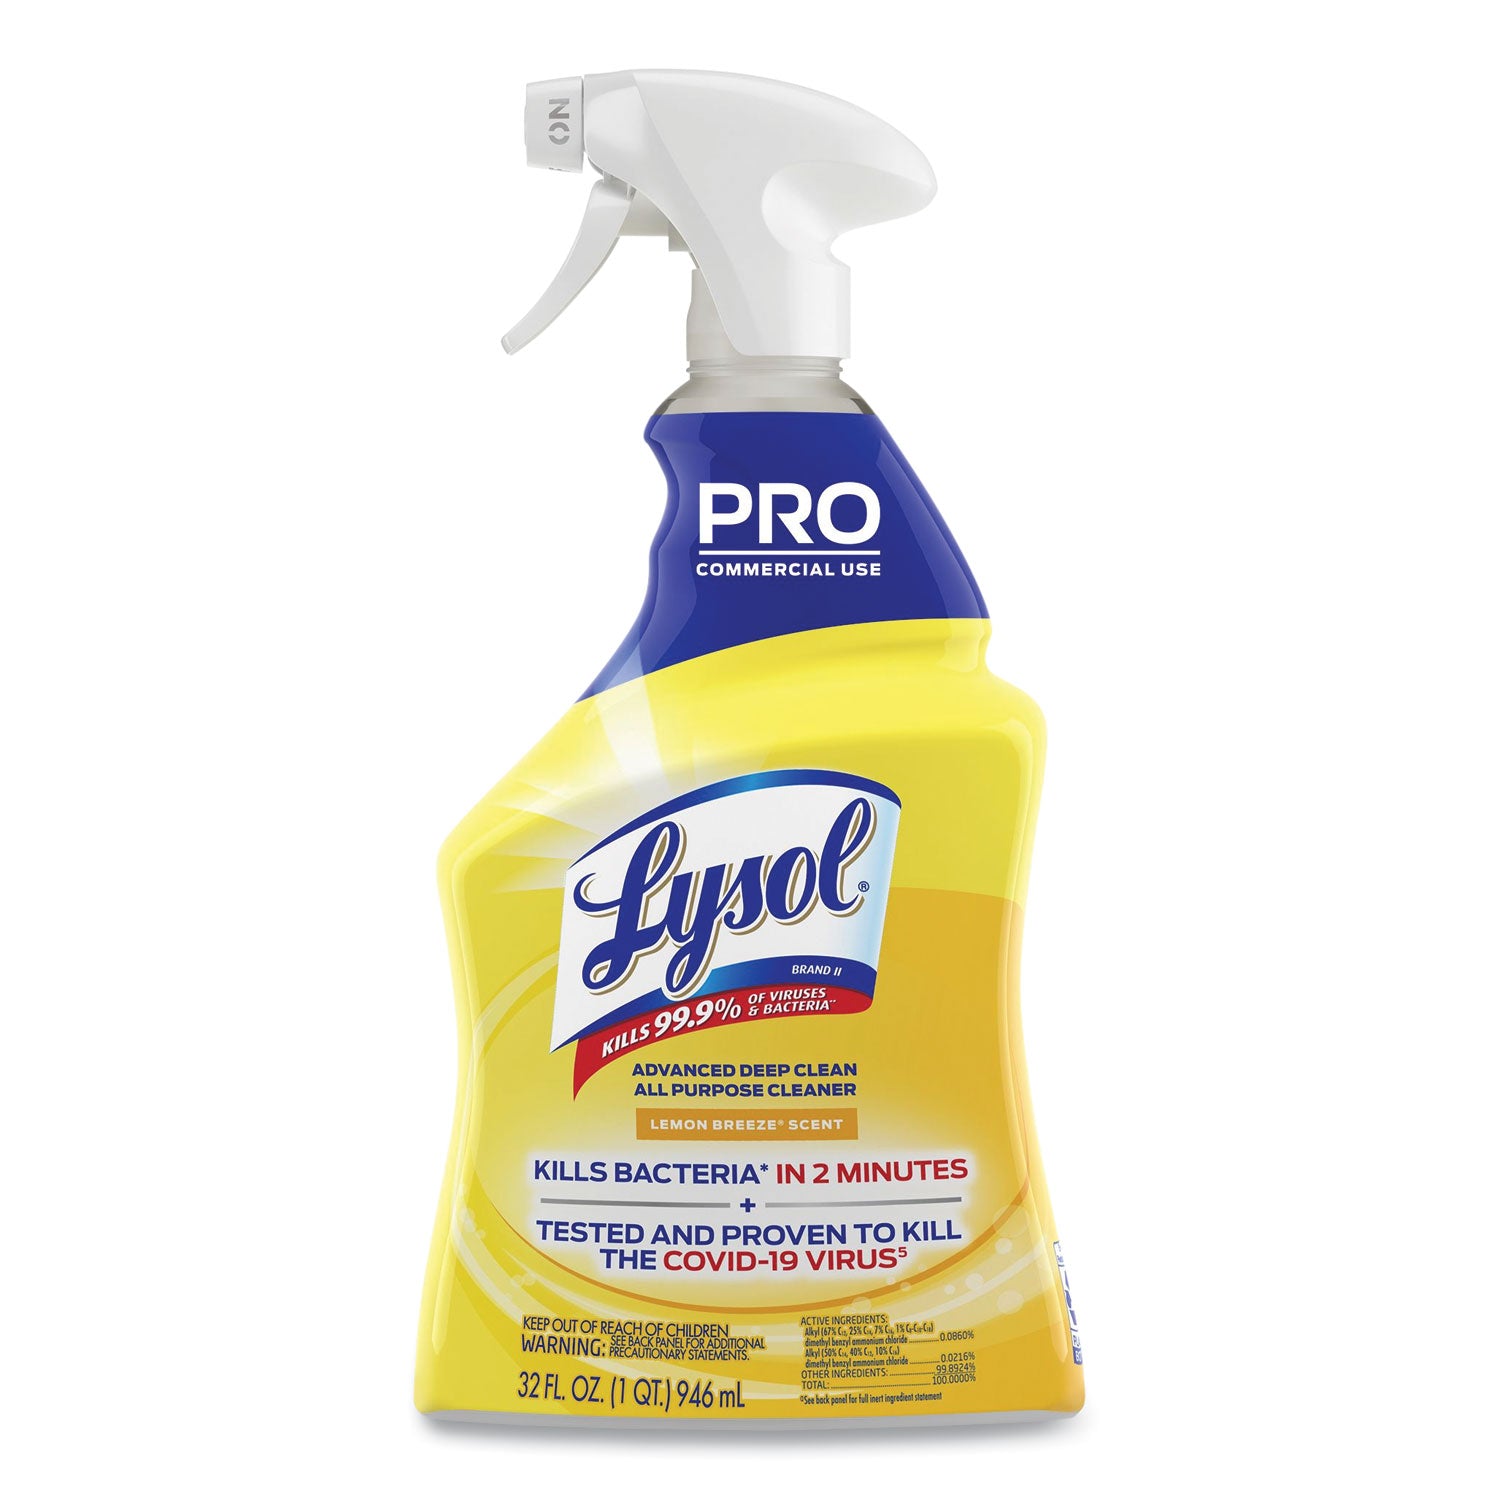 advanced-deep-clean-all-purpose-cleaner-lemon-breeze-32-oz-trigger-spray-bottle_rac00351ea - 1